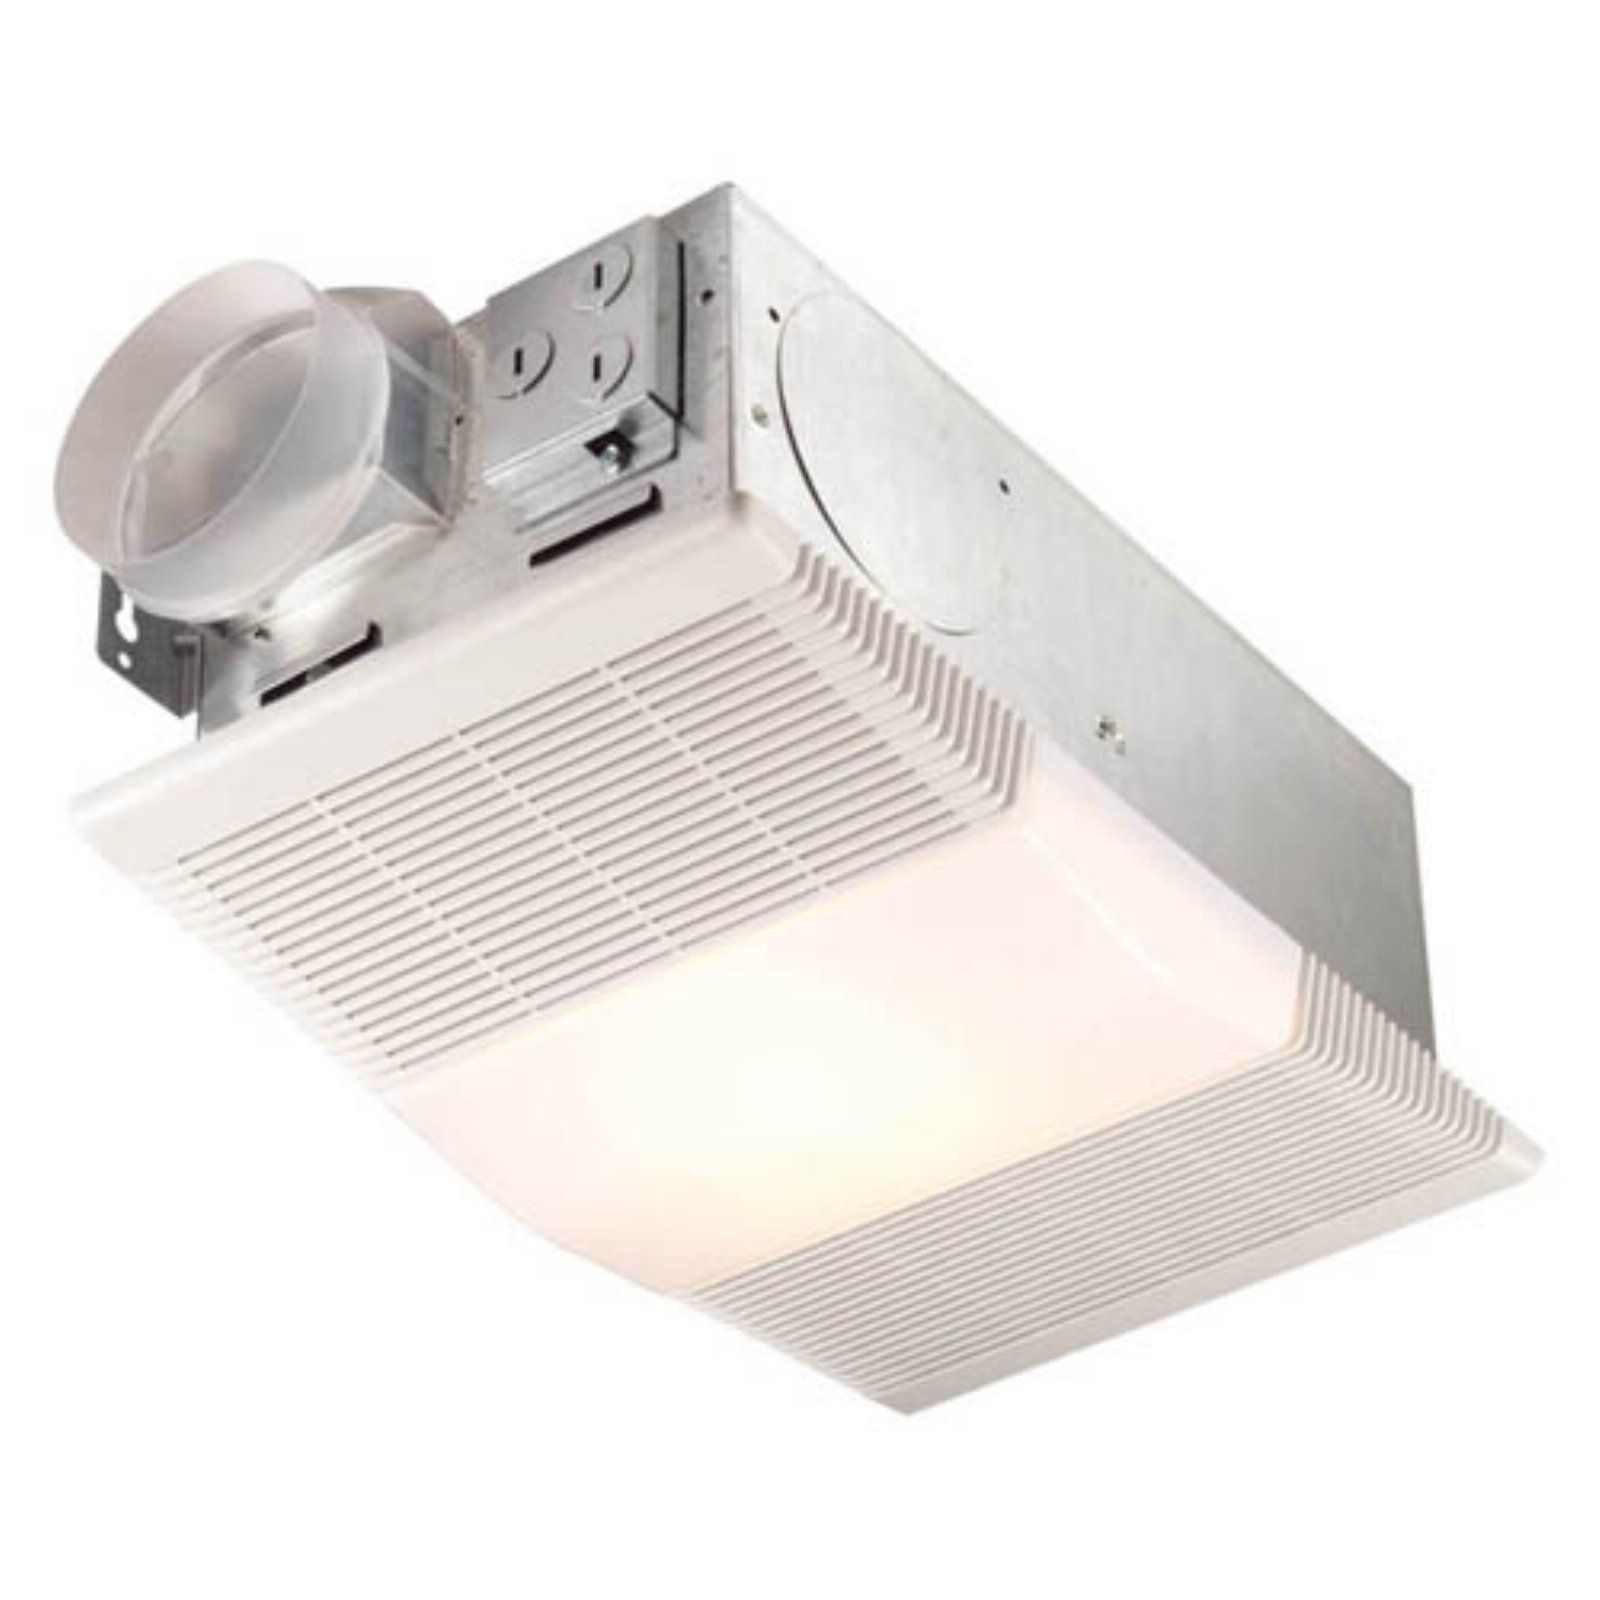 Broan Nutone 665rp Bathroom Heat Fan Light With Images in size 1600 X 1600